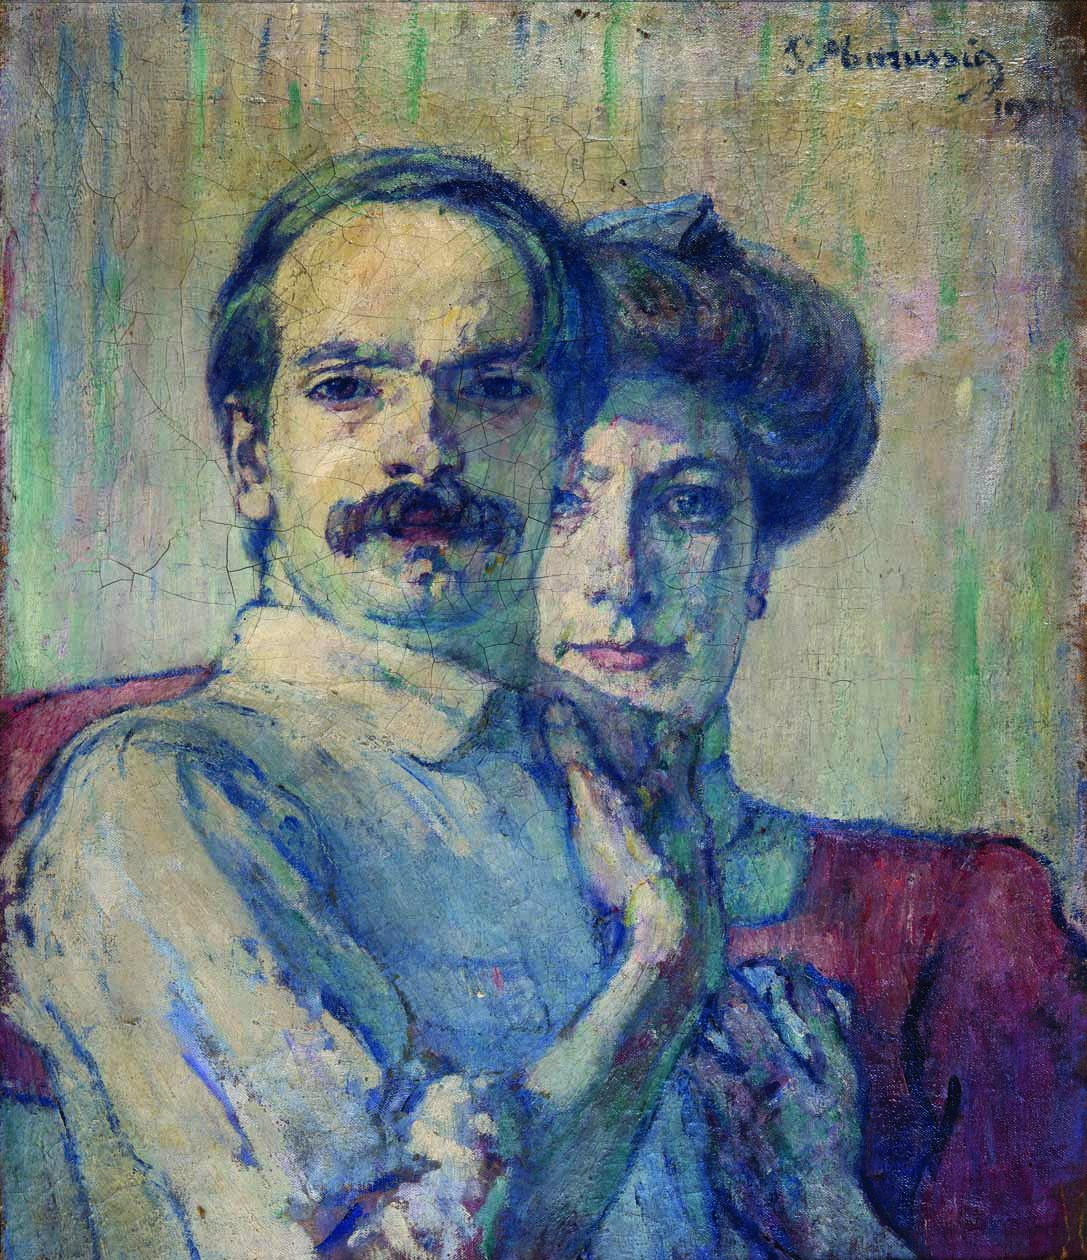 Piero Marussig. Autoritratto con la moglie, 1911